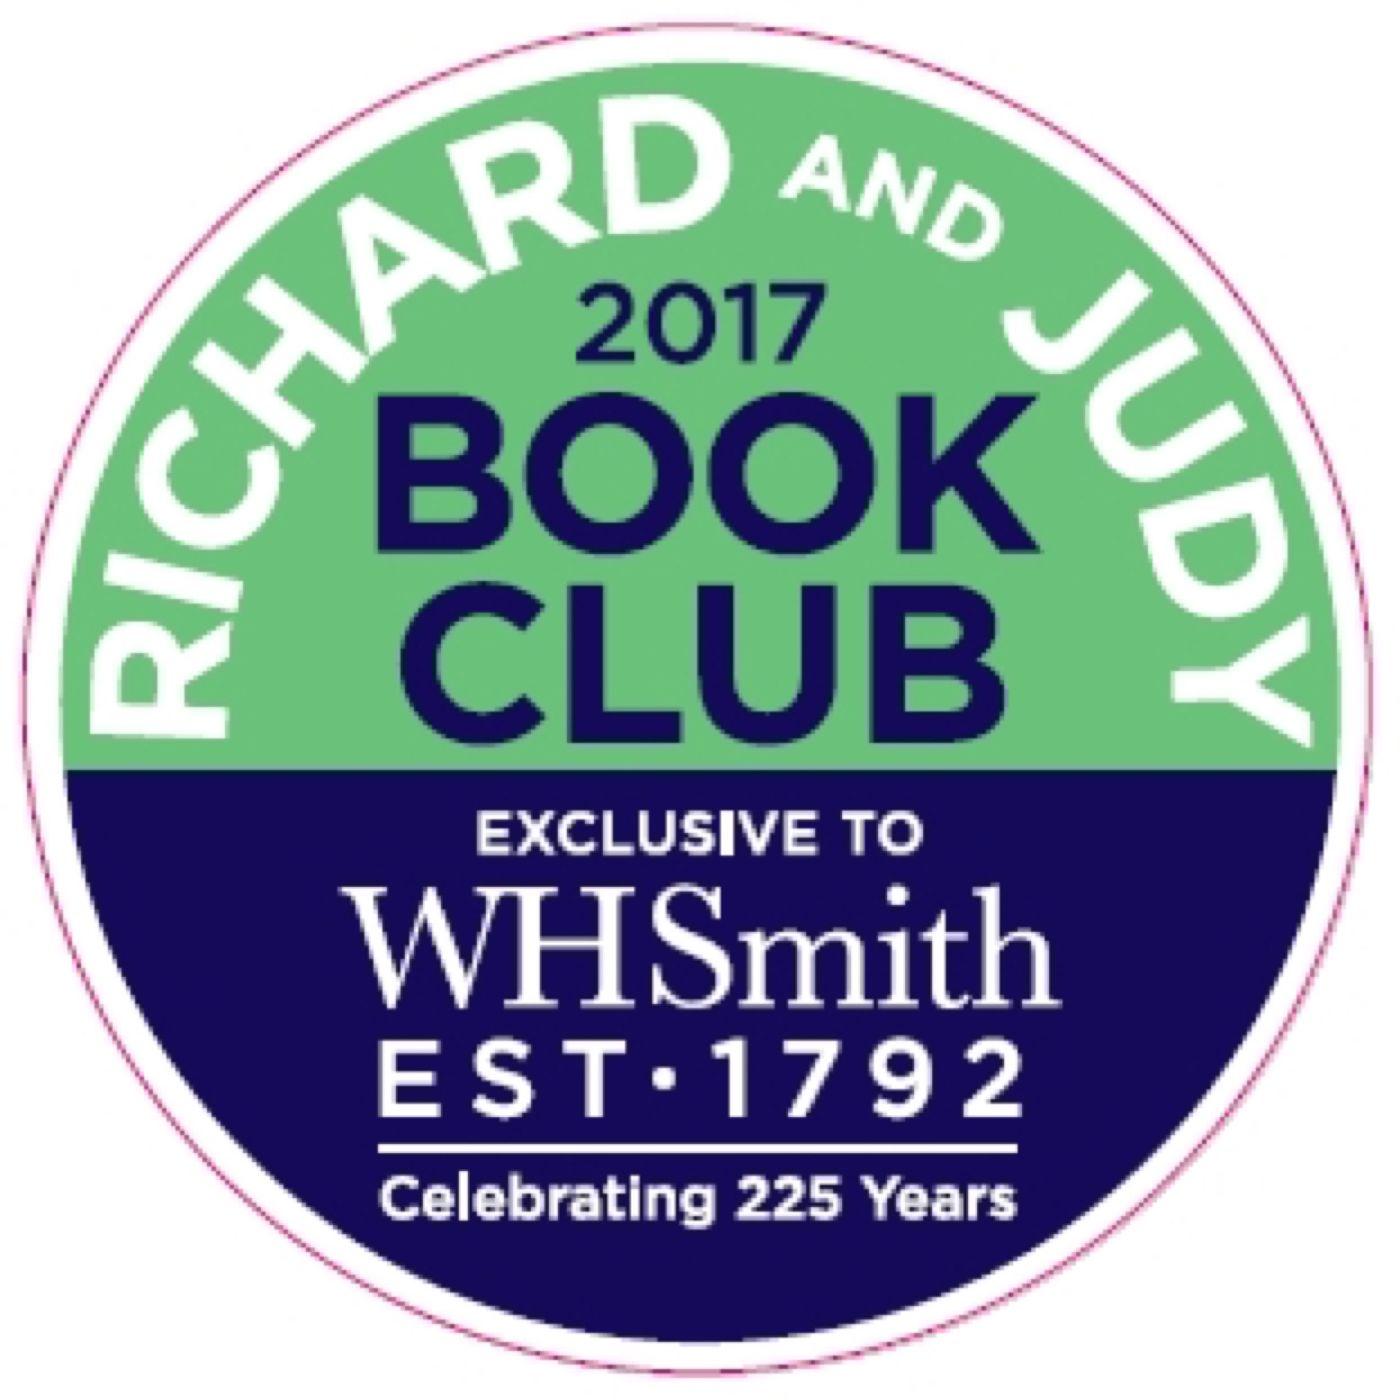 WHSmith Logo - pod. fanatic. Podcast: Richard and Judy Book Club Podcast